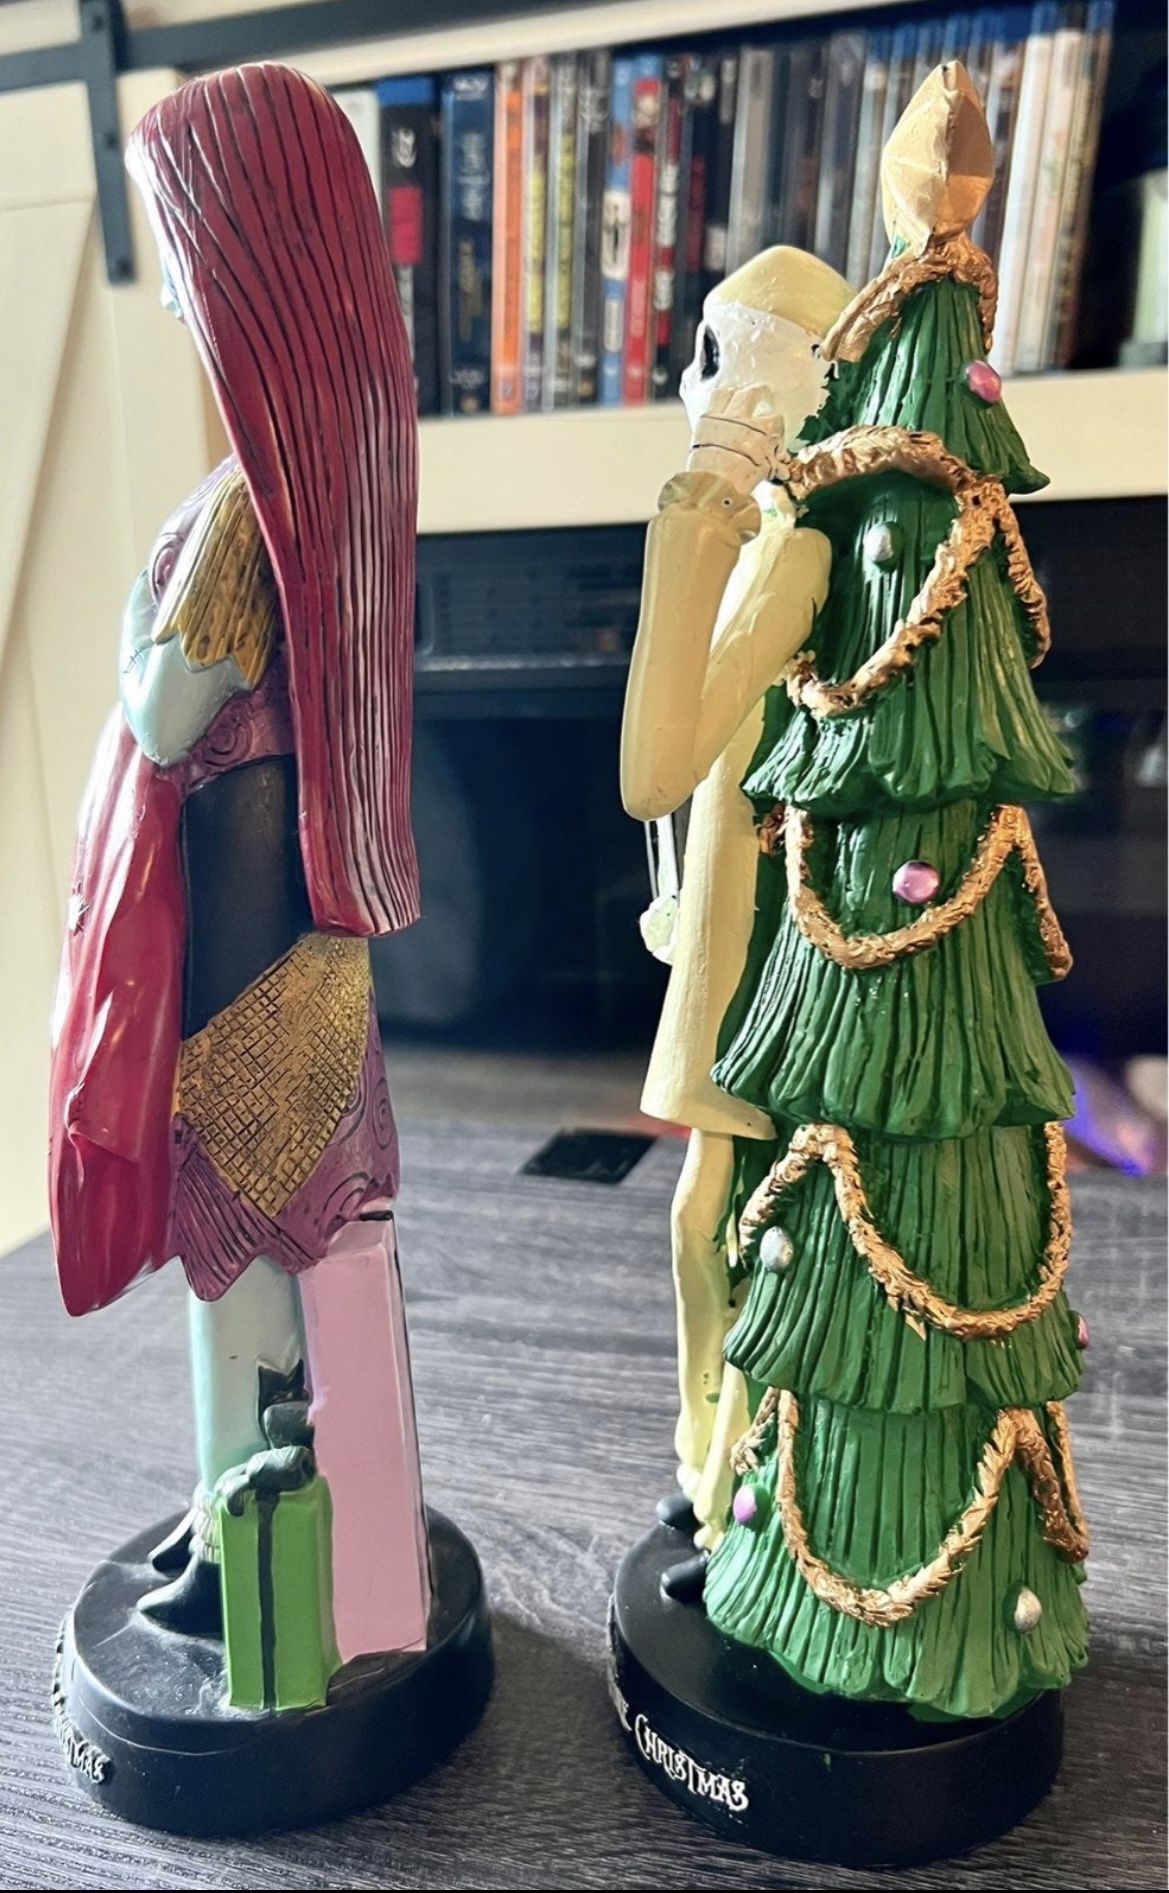 Nightmare Before Christmas Statues/Figures